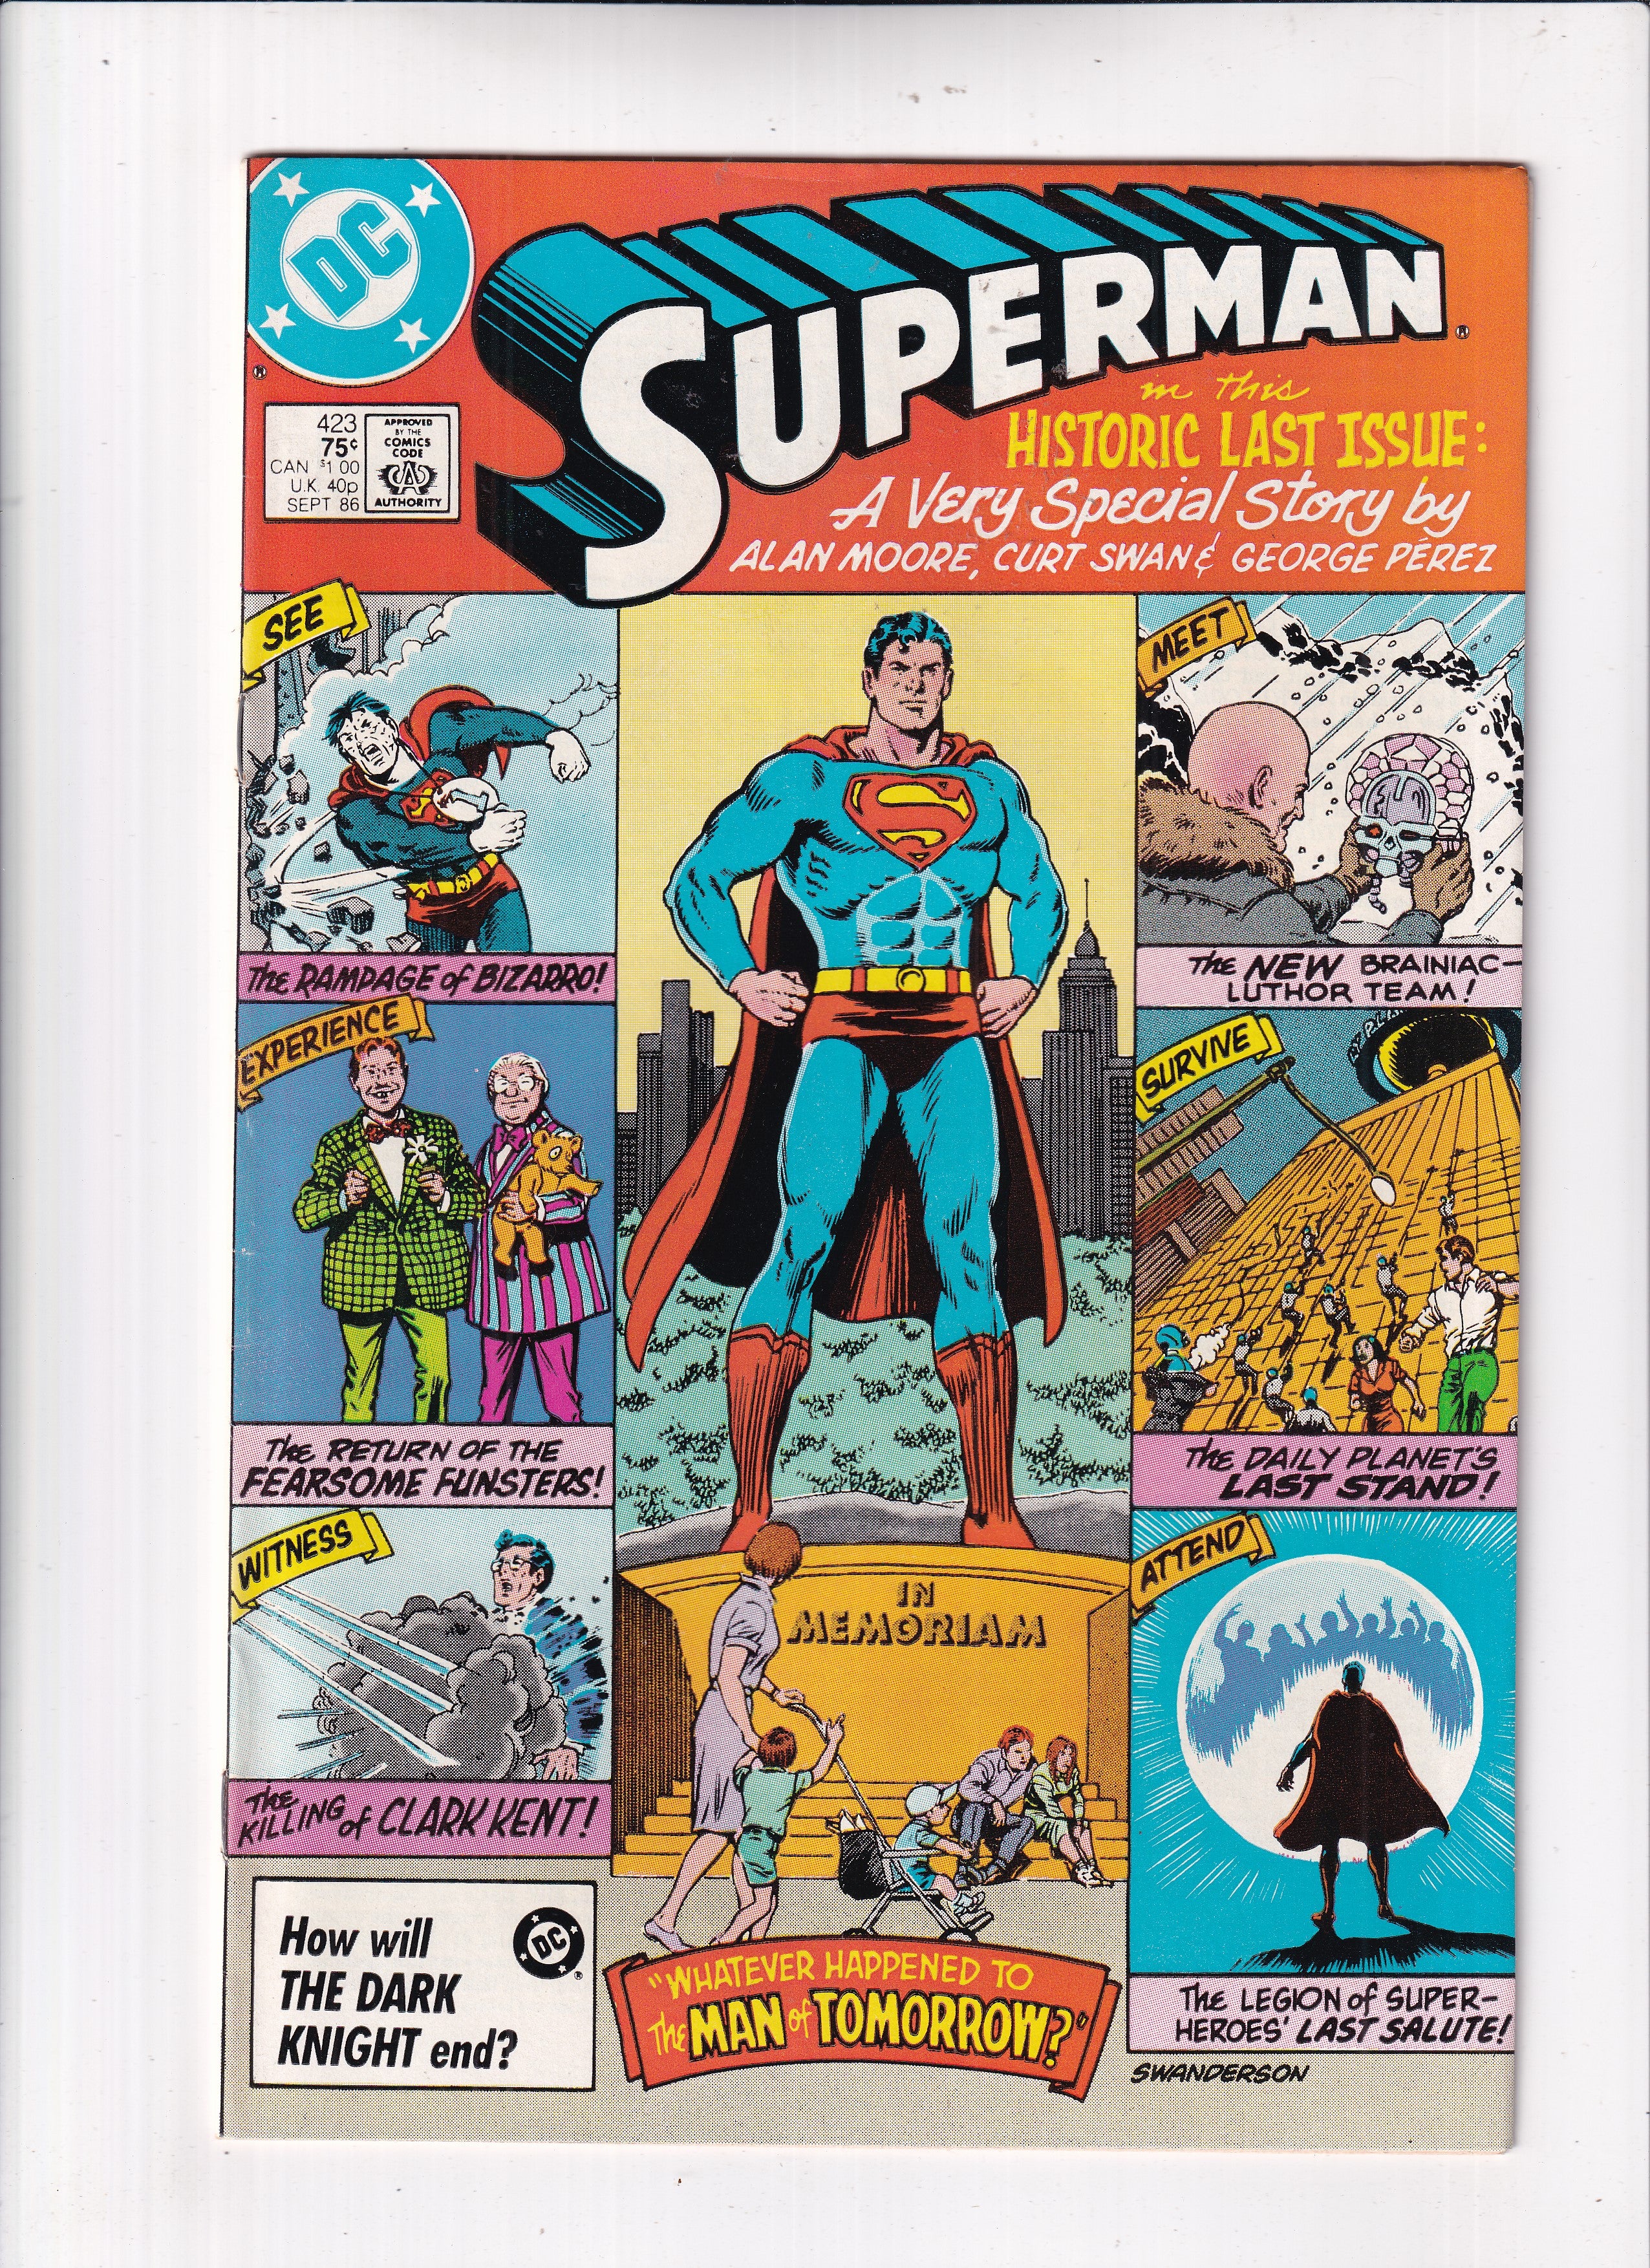 SUPERMAN #423 - Slab City Comics 